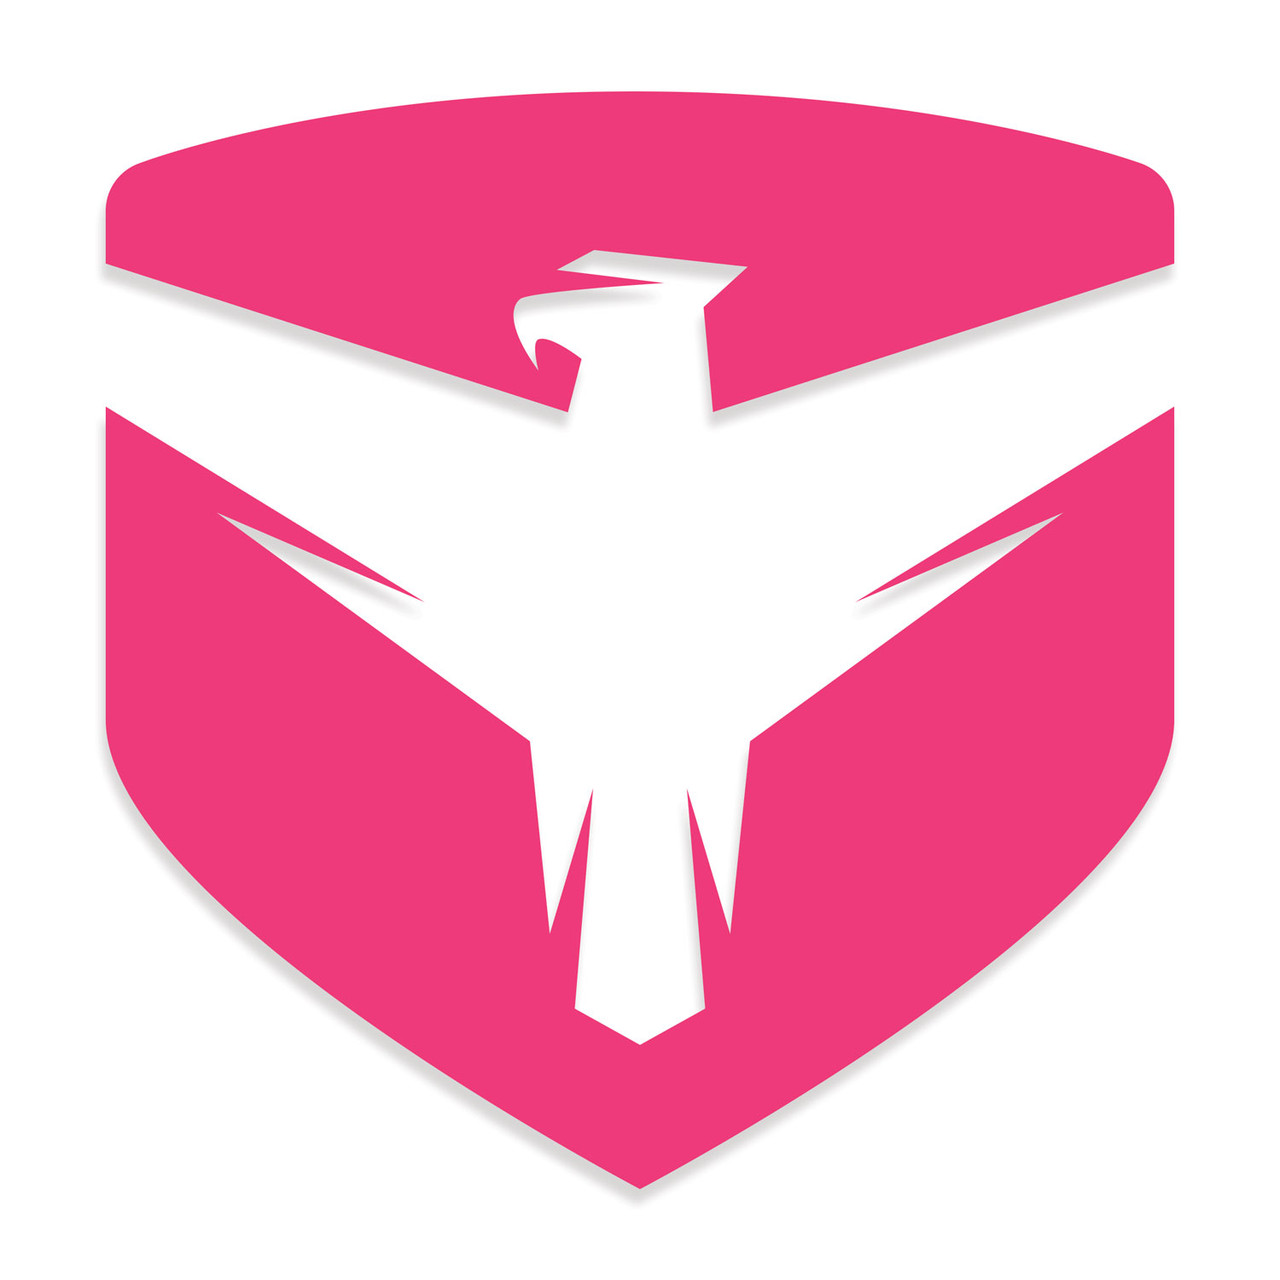 Falcon Performance Shocks Icon Decal 4.5 Inch Pink Teraflex